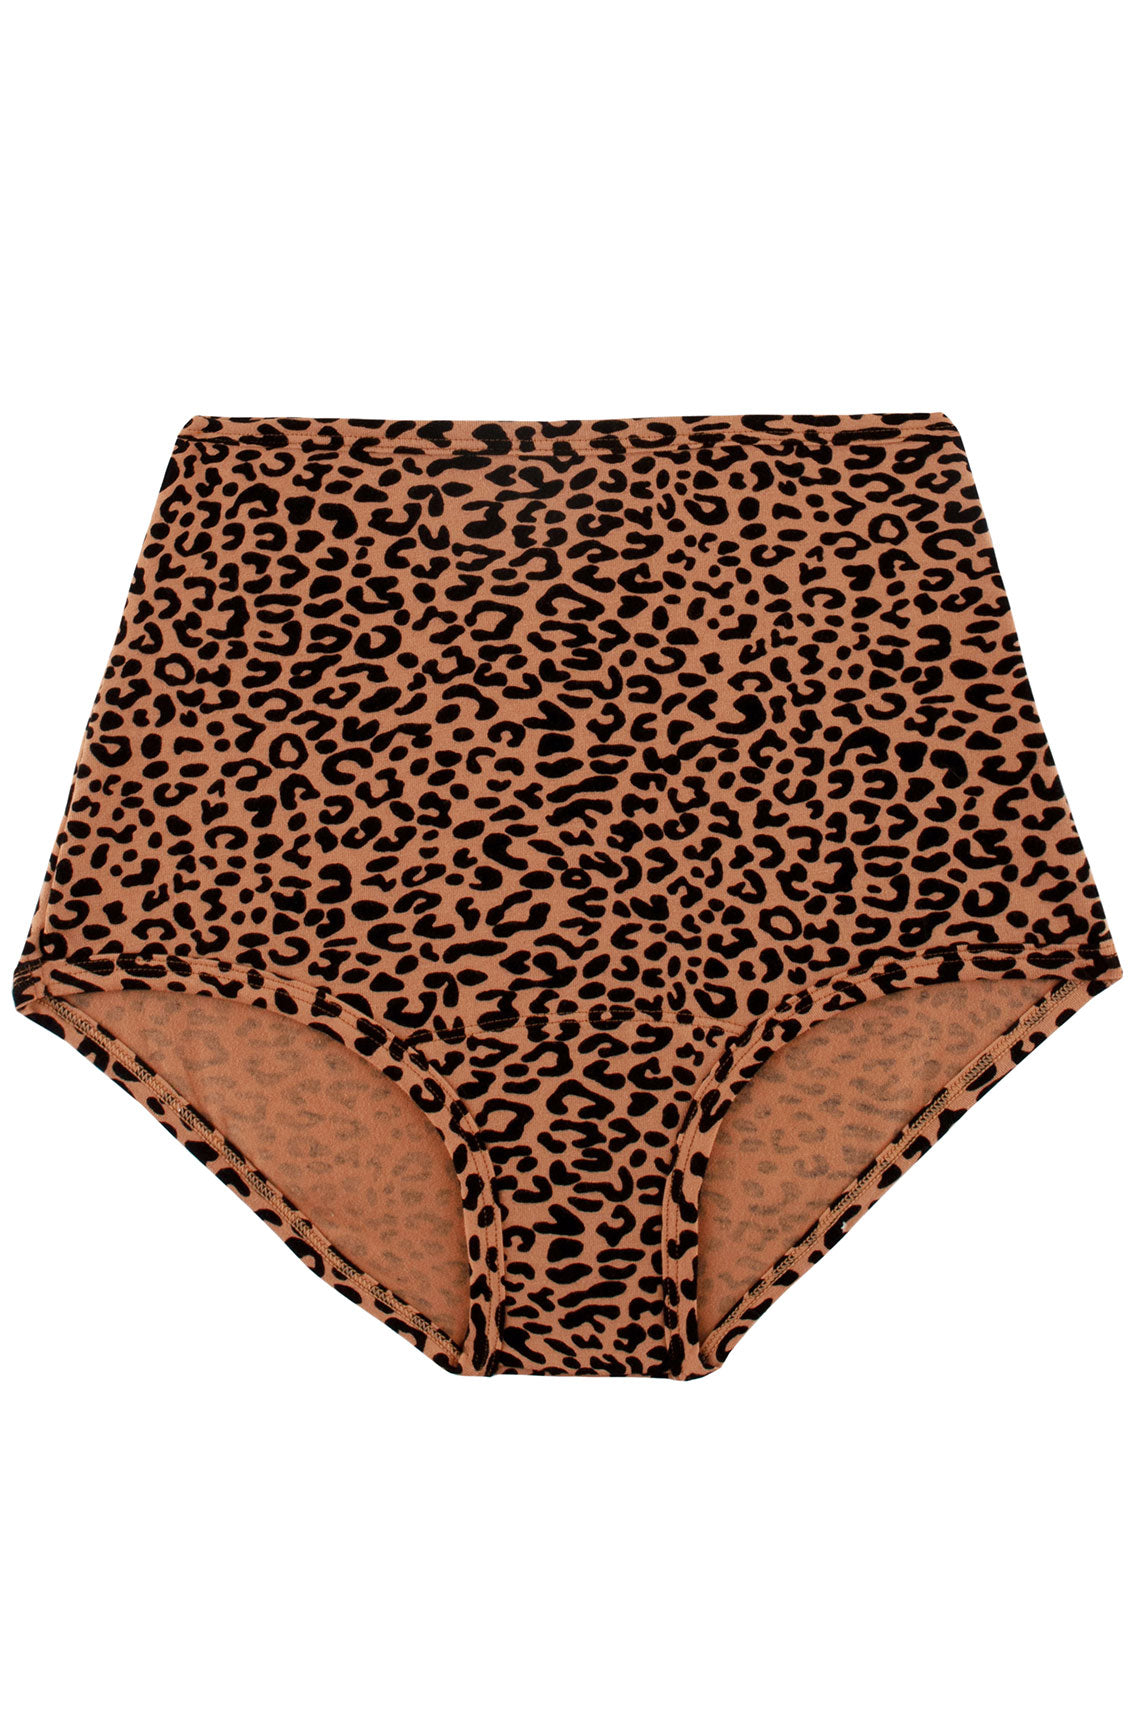 ARQ high rise underwear in leopard print